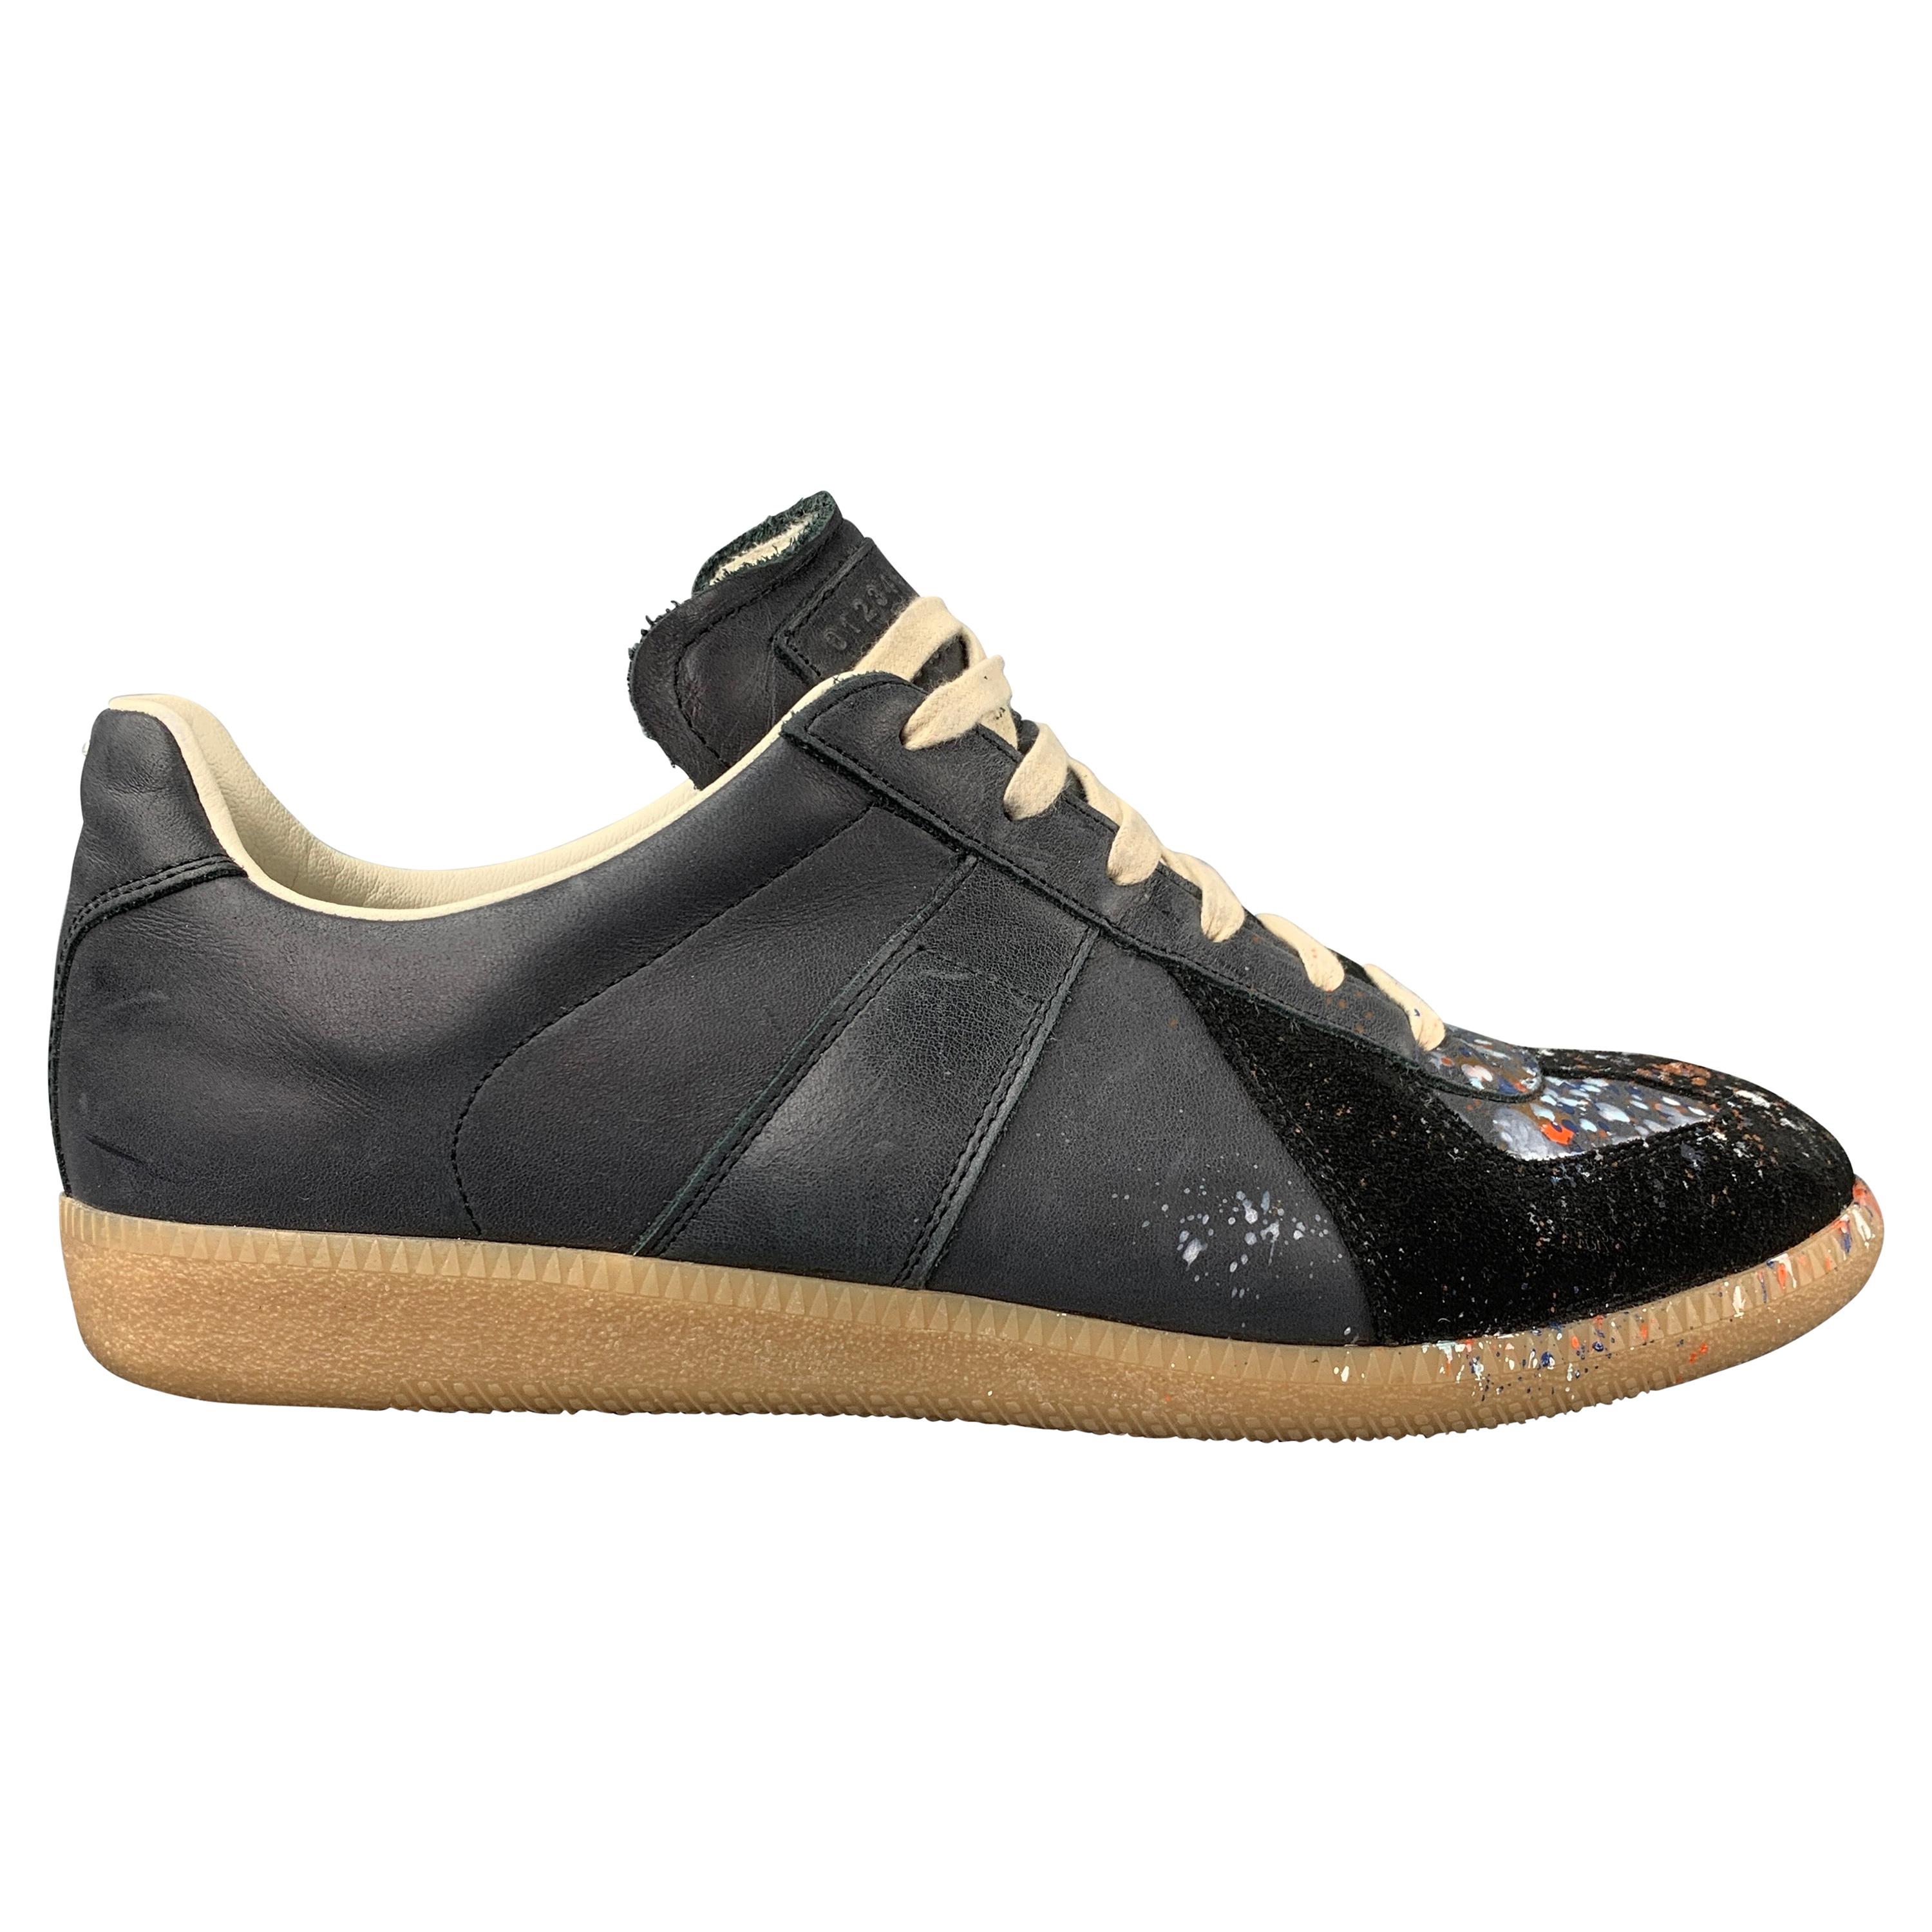 MAISON MARTIN MARGIELA Size 10.5 Grey & Black Paint Splatter Leather Sneakers